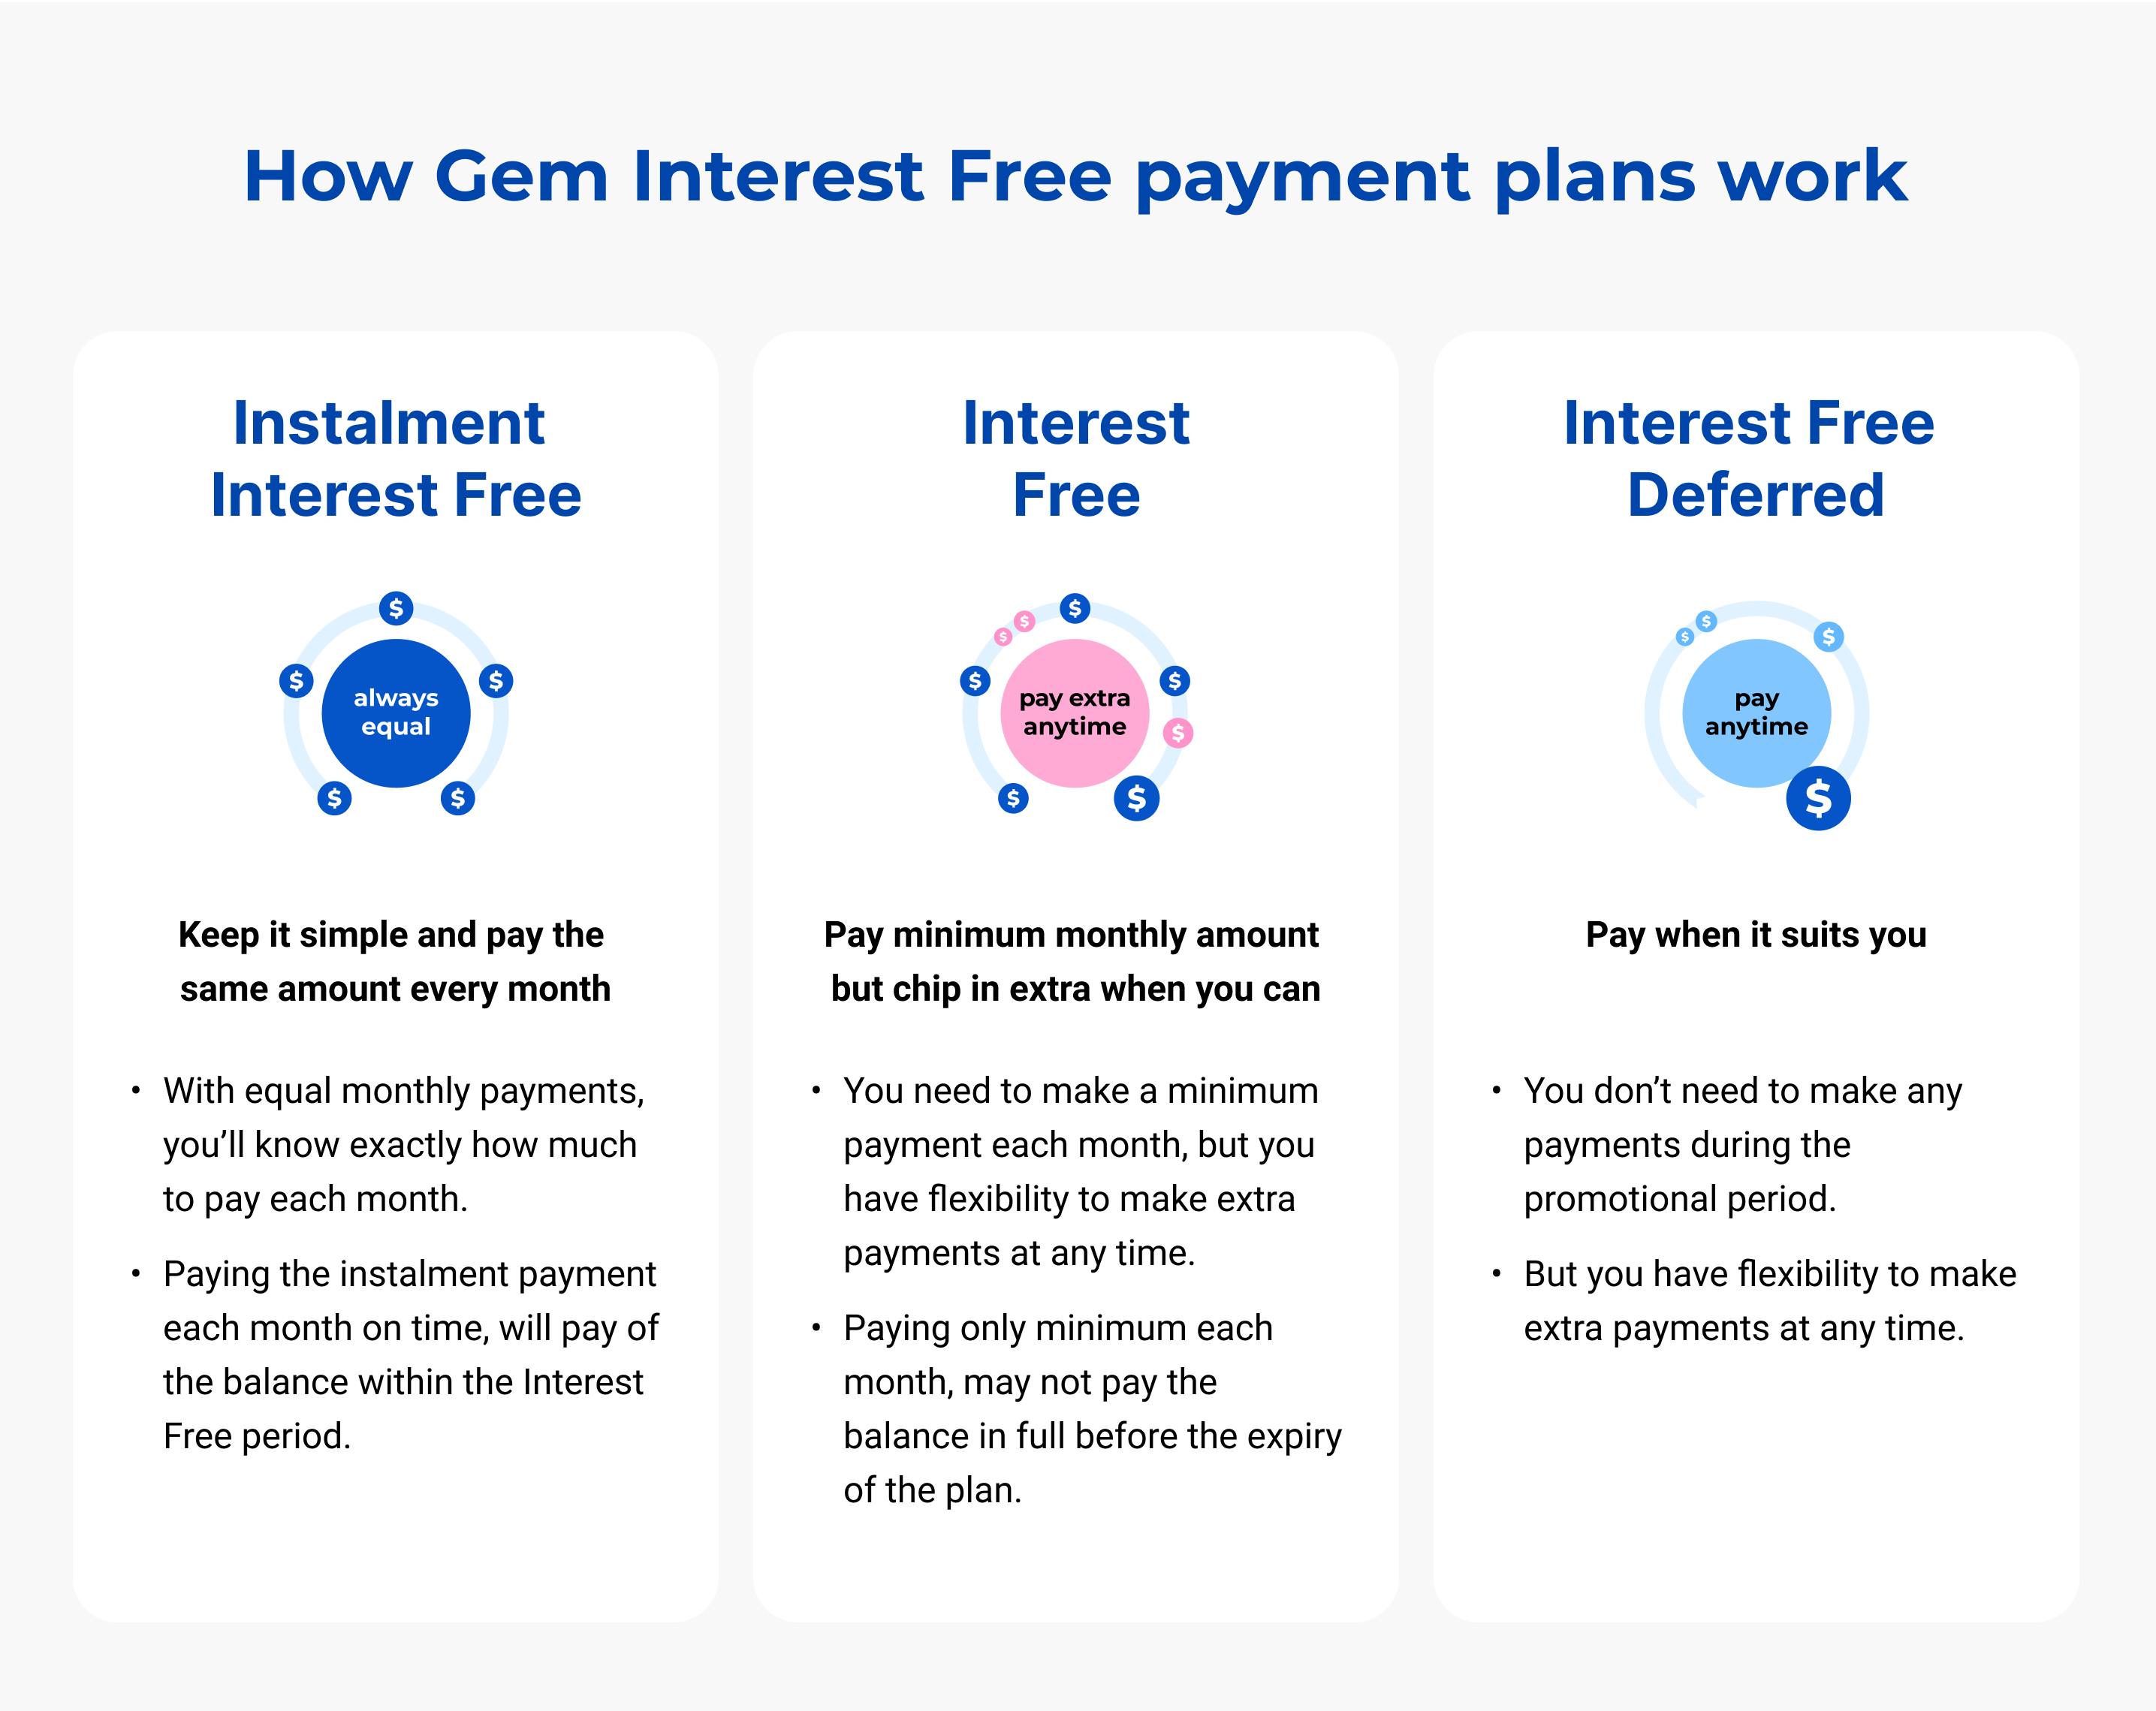 Interest Free Plans explained